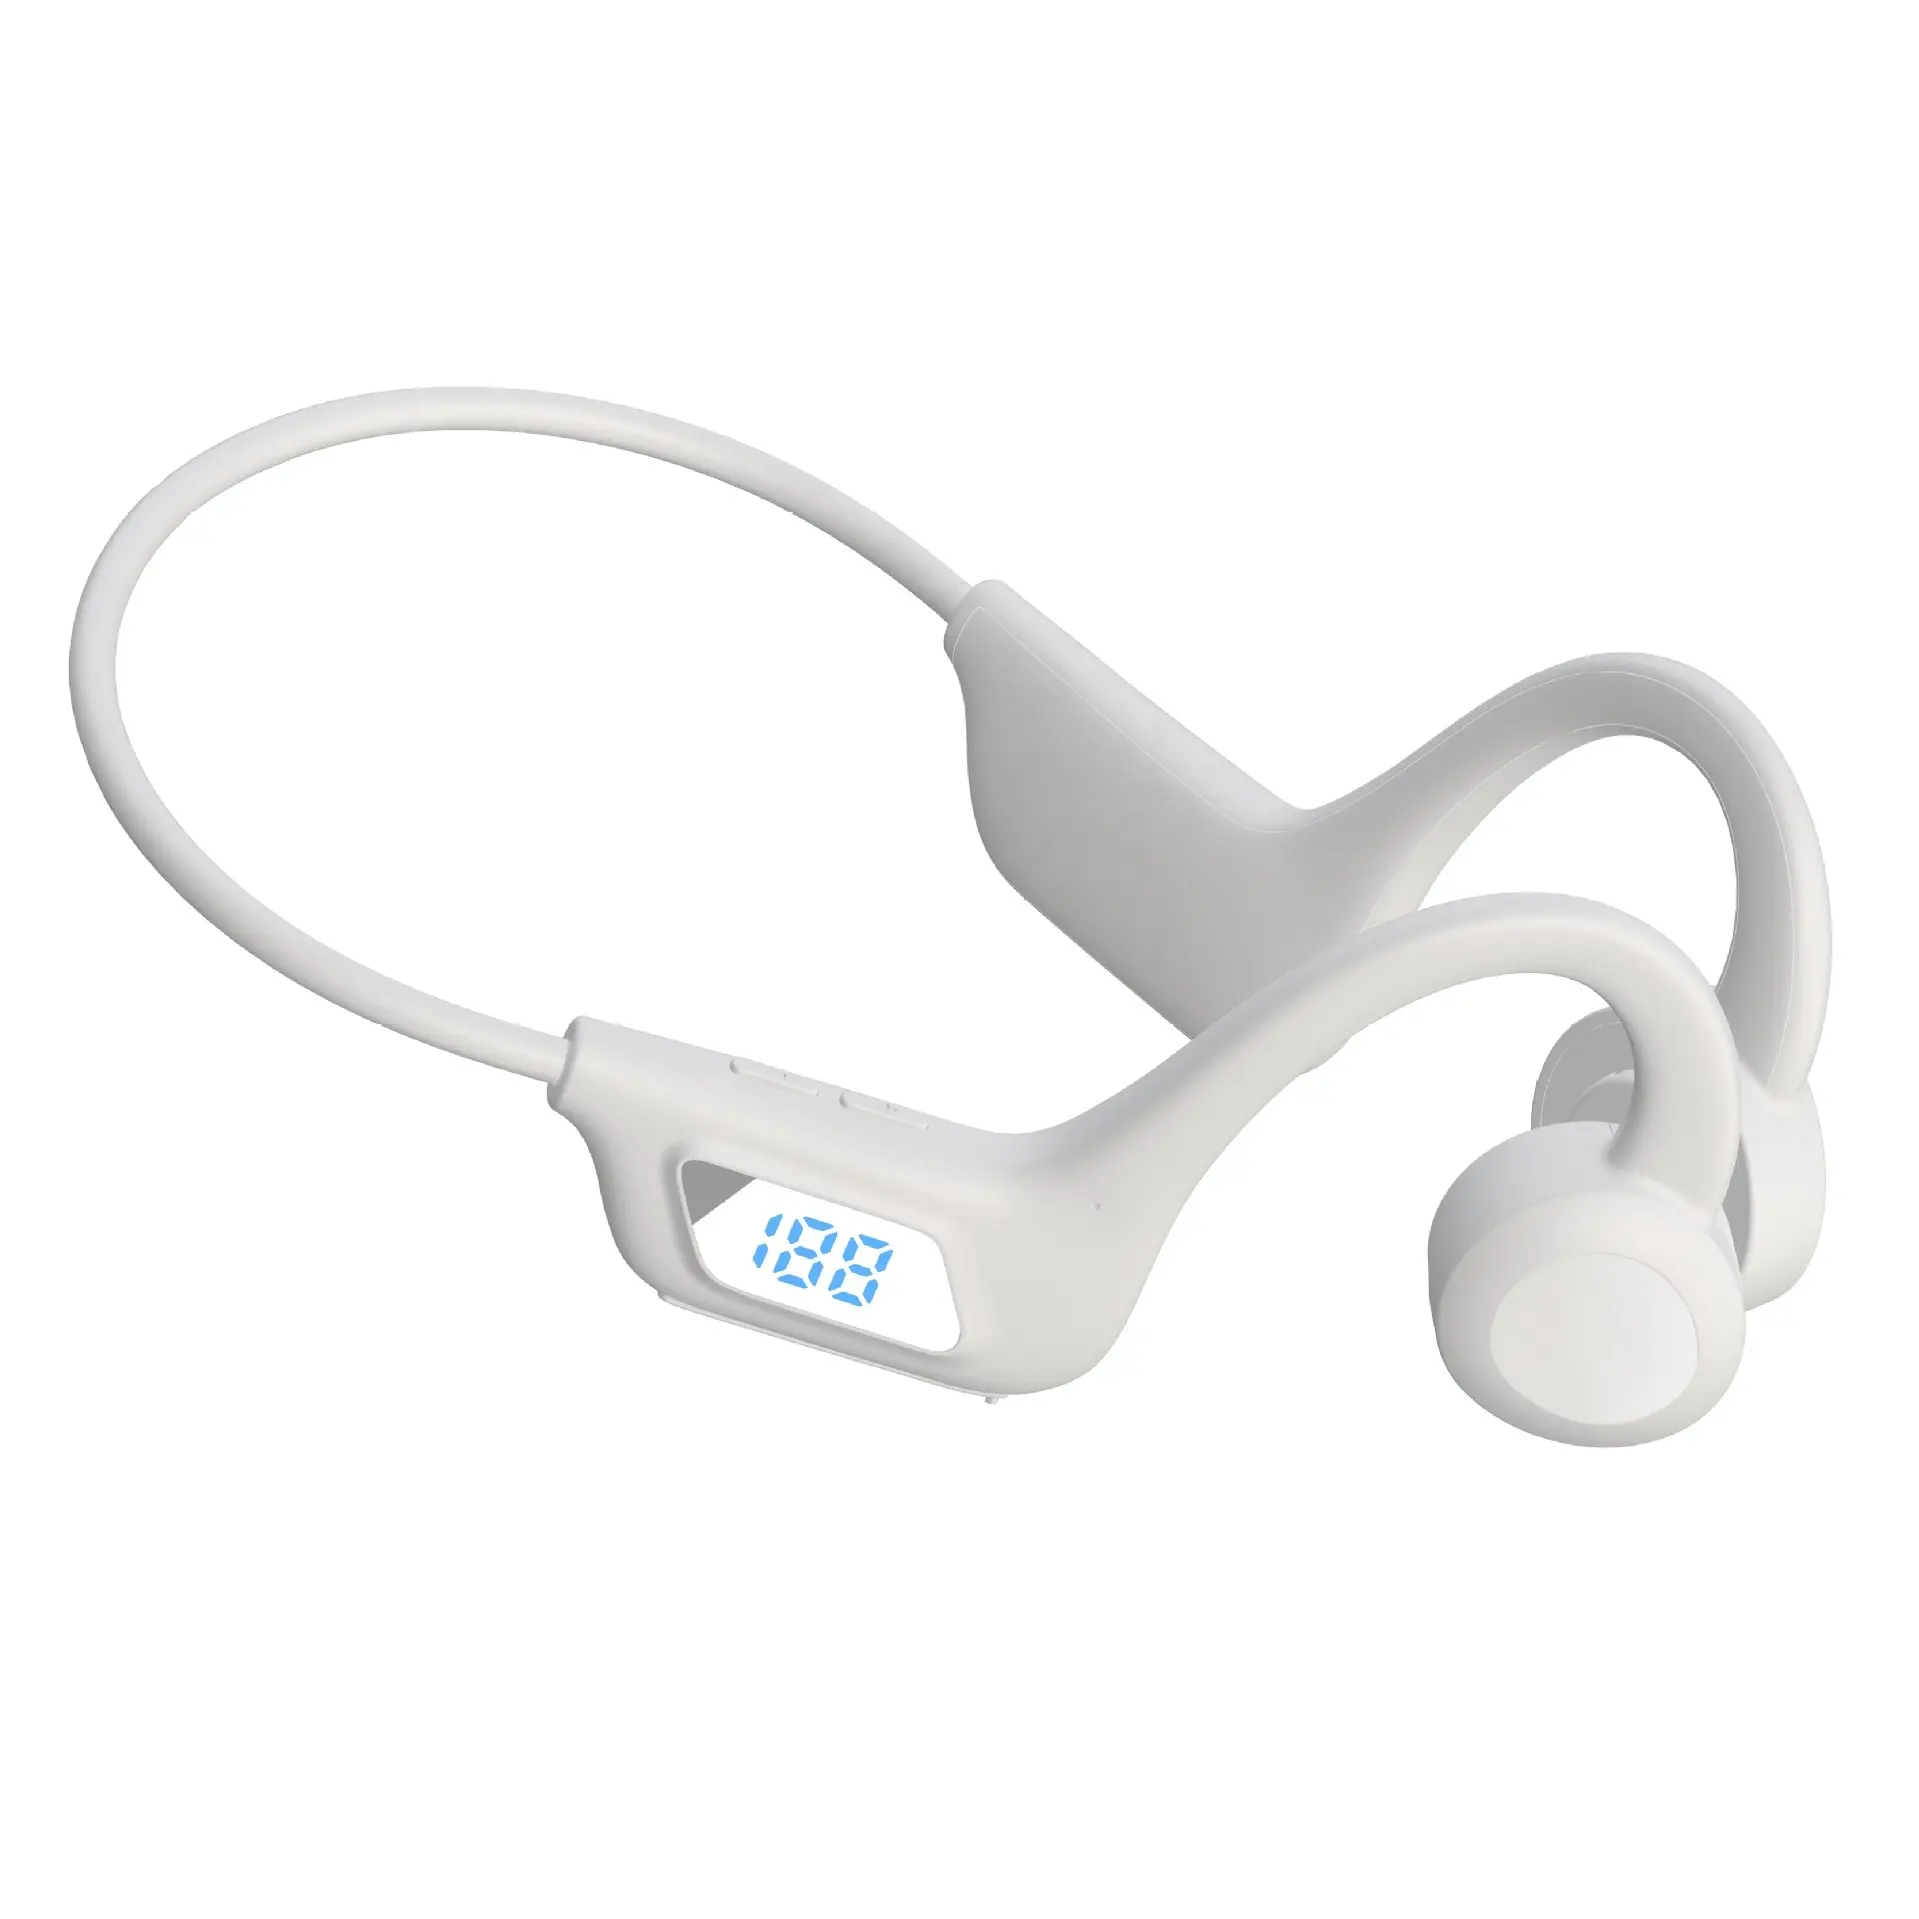 LK1 Bone Conduction Earbuds Support Memory Card Play Bluetooth V5.1 Bone Headphones Digital Display for Sports 180mah 8 Hours